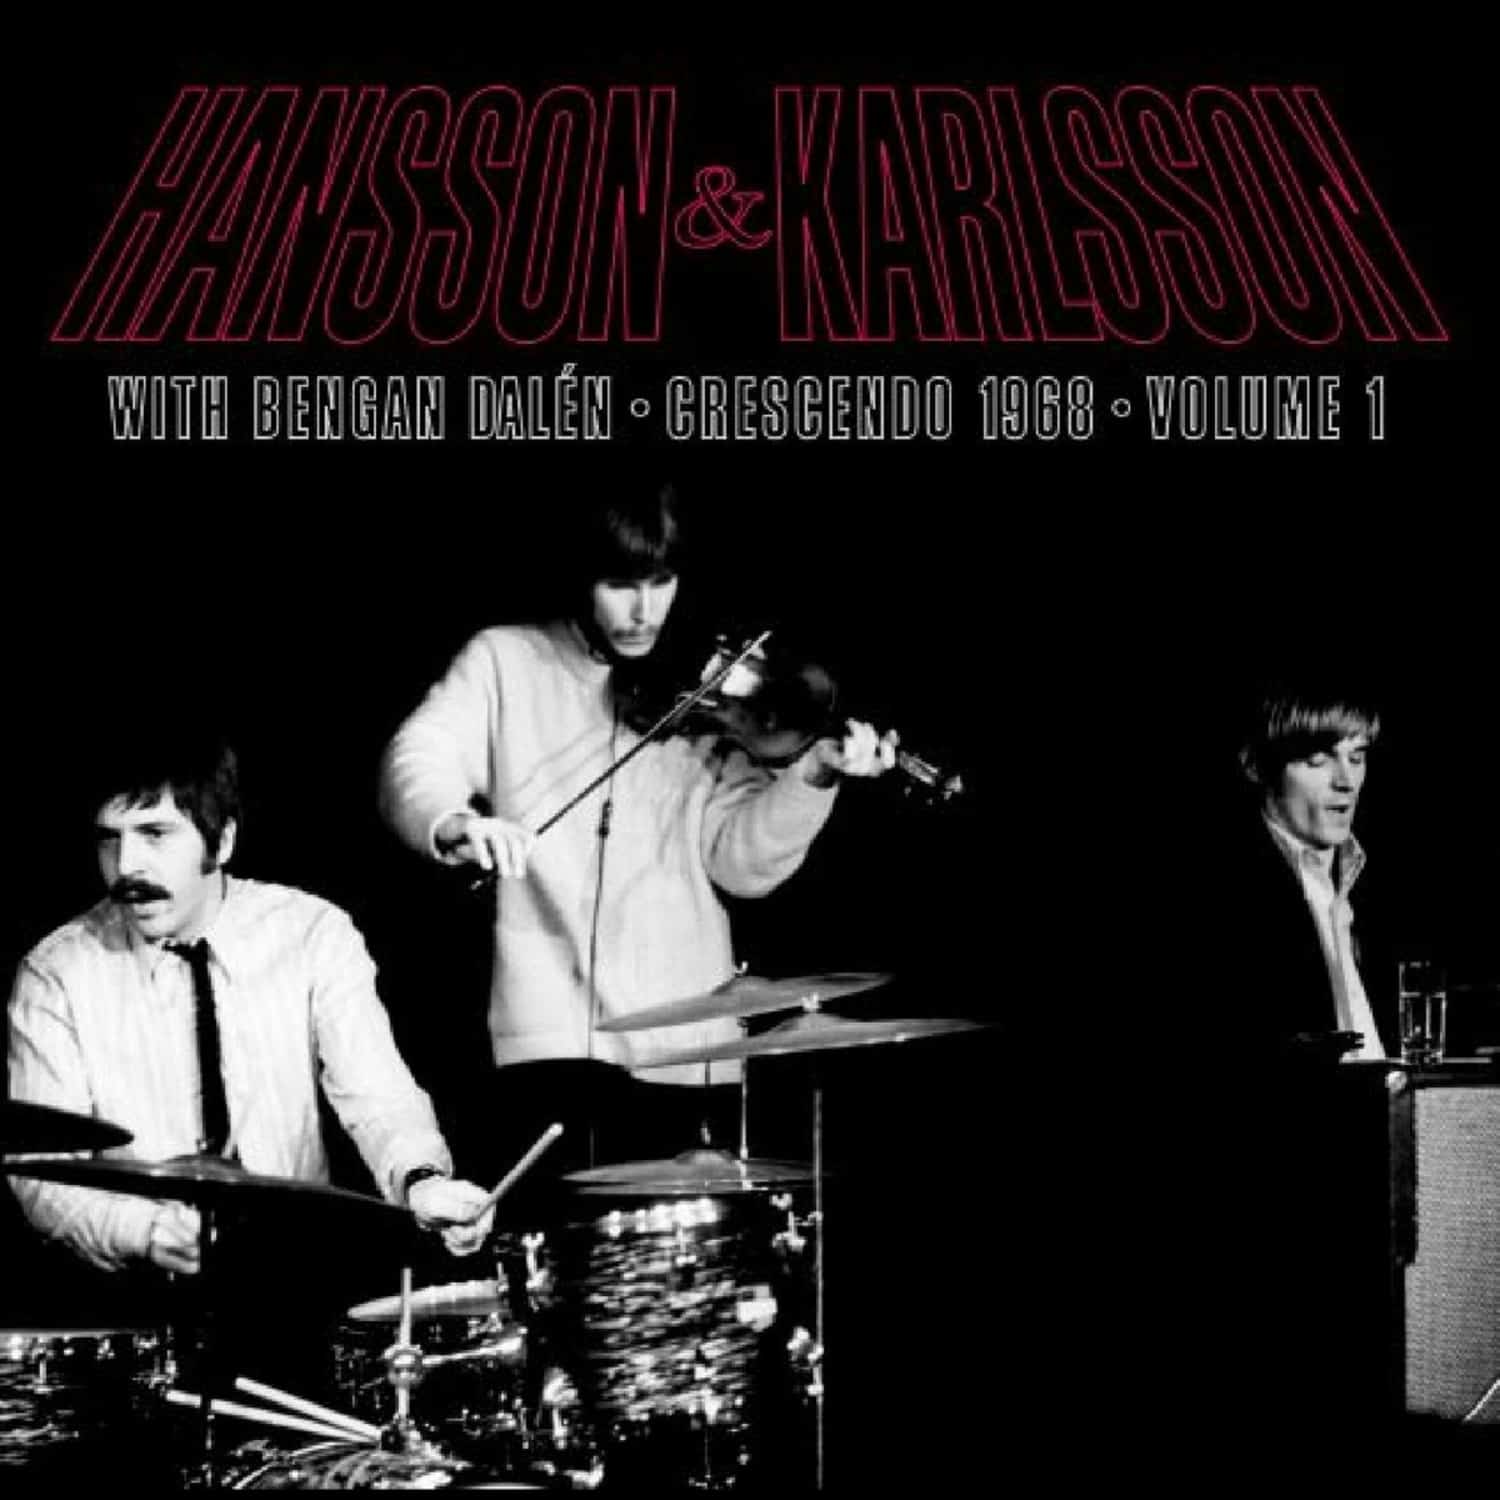 Hansson & Karlsson - CRESCENDO 1968 VOL. 1 